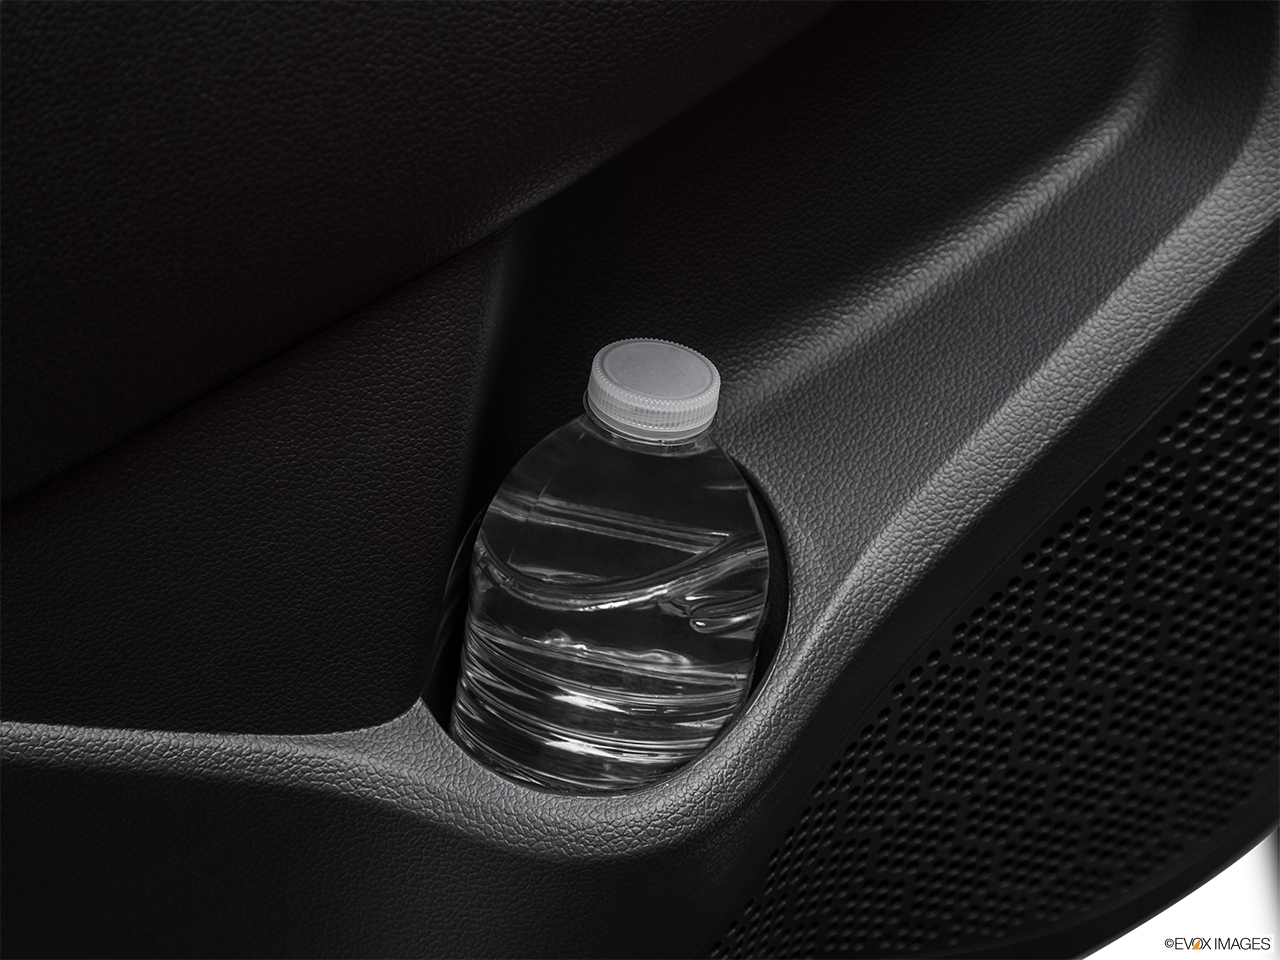 2015 Kia Rio 5-door SX Second row side cup holder with coffee prop, or second row door cup holder with water bottle. 